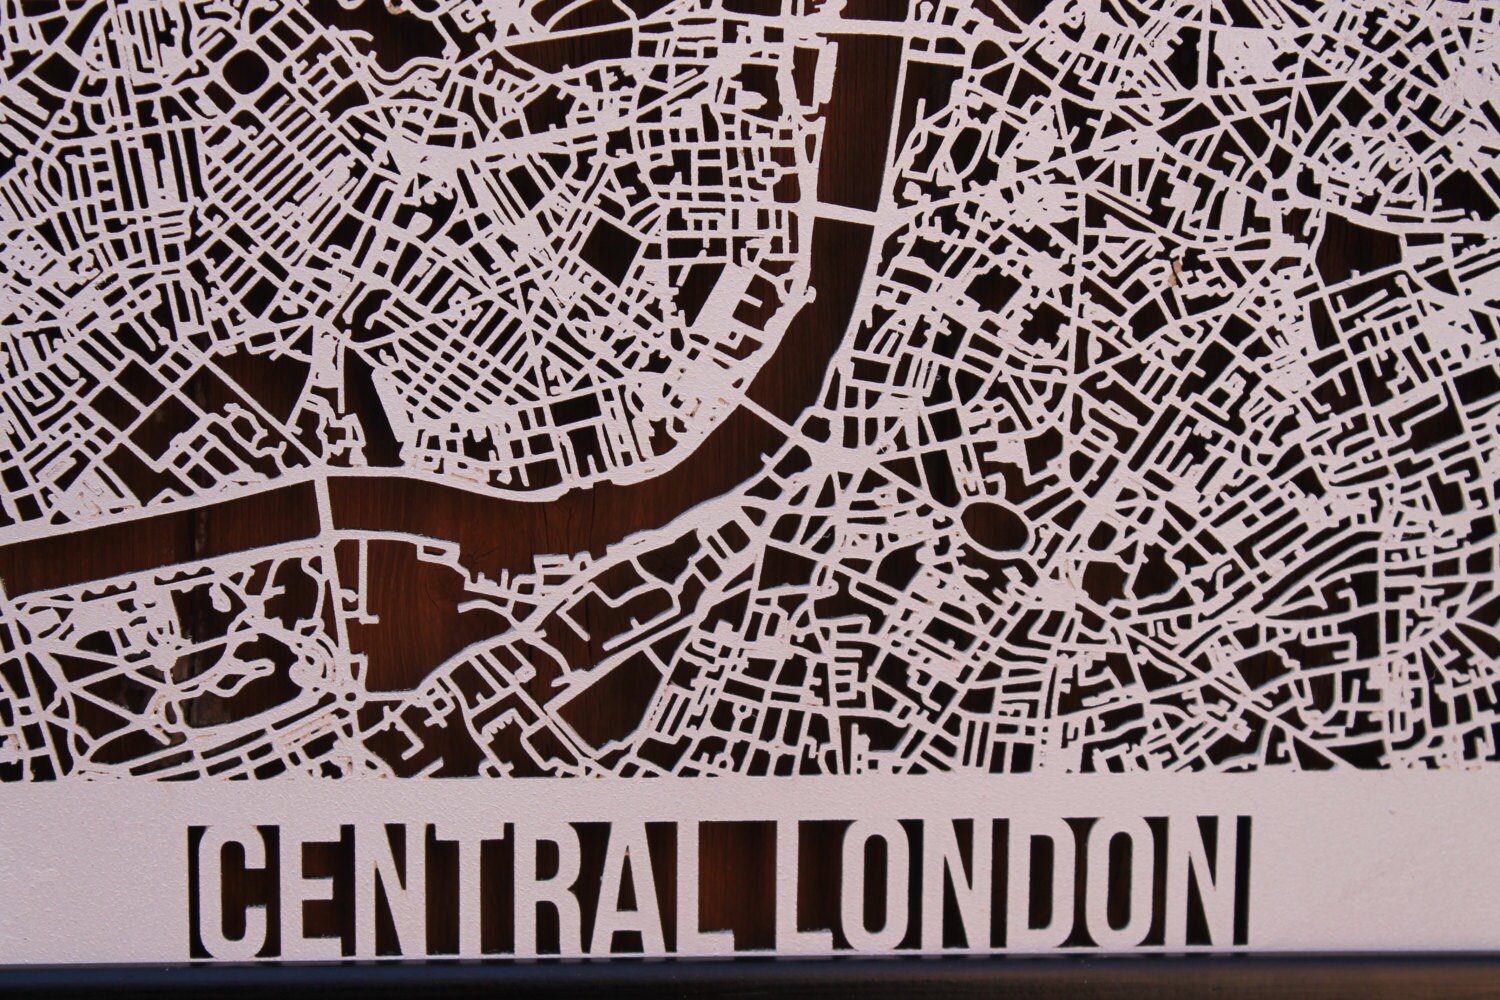 Custom Laser Cut Street Maps City Map Personalised Wooden Map Bespoke Customised